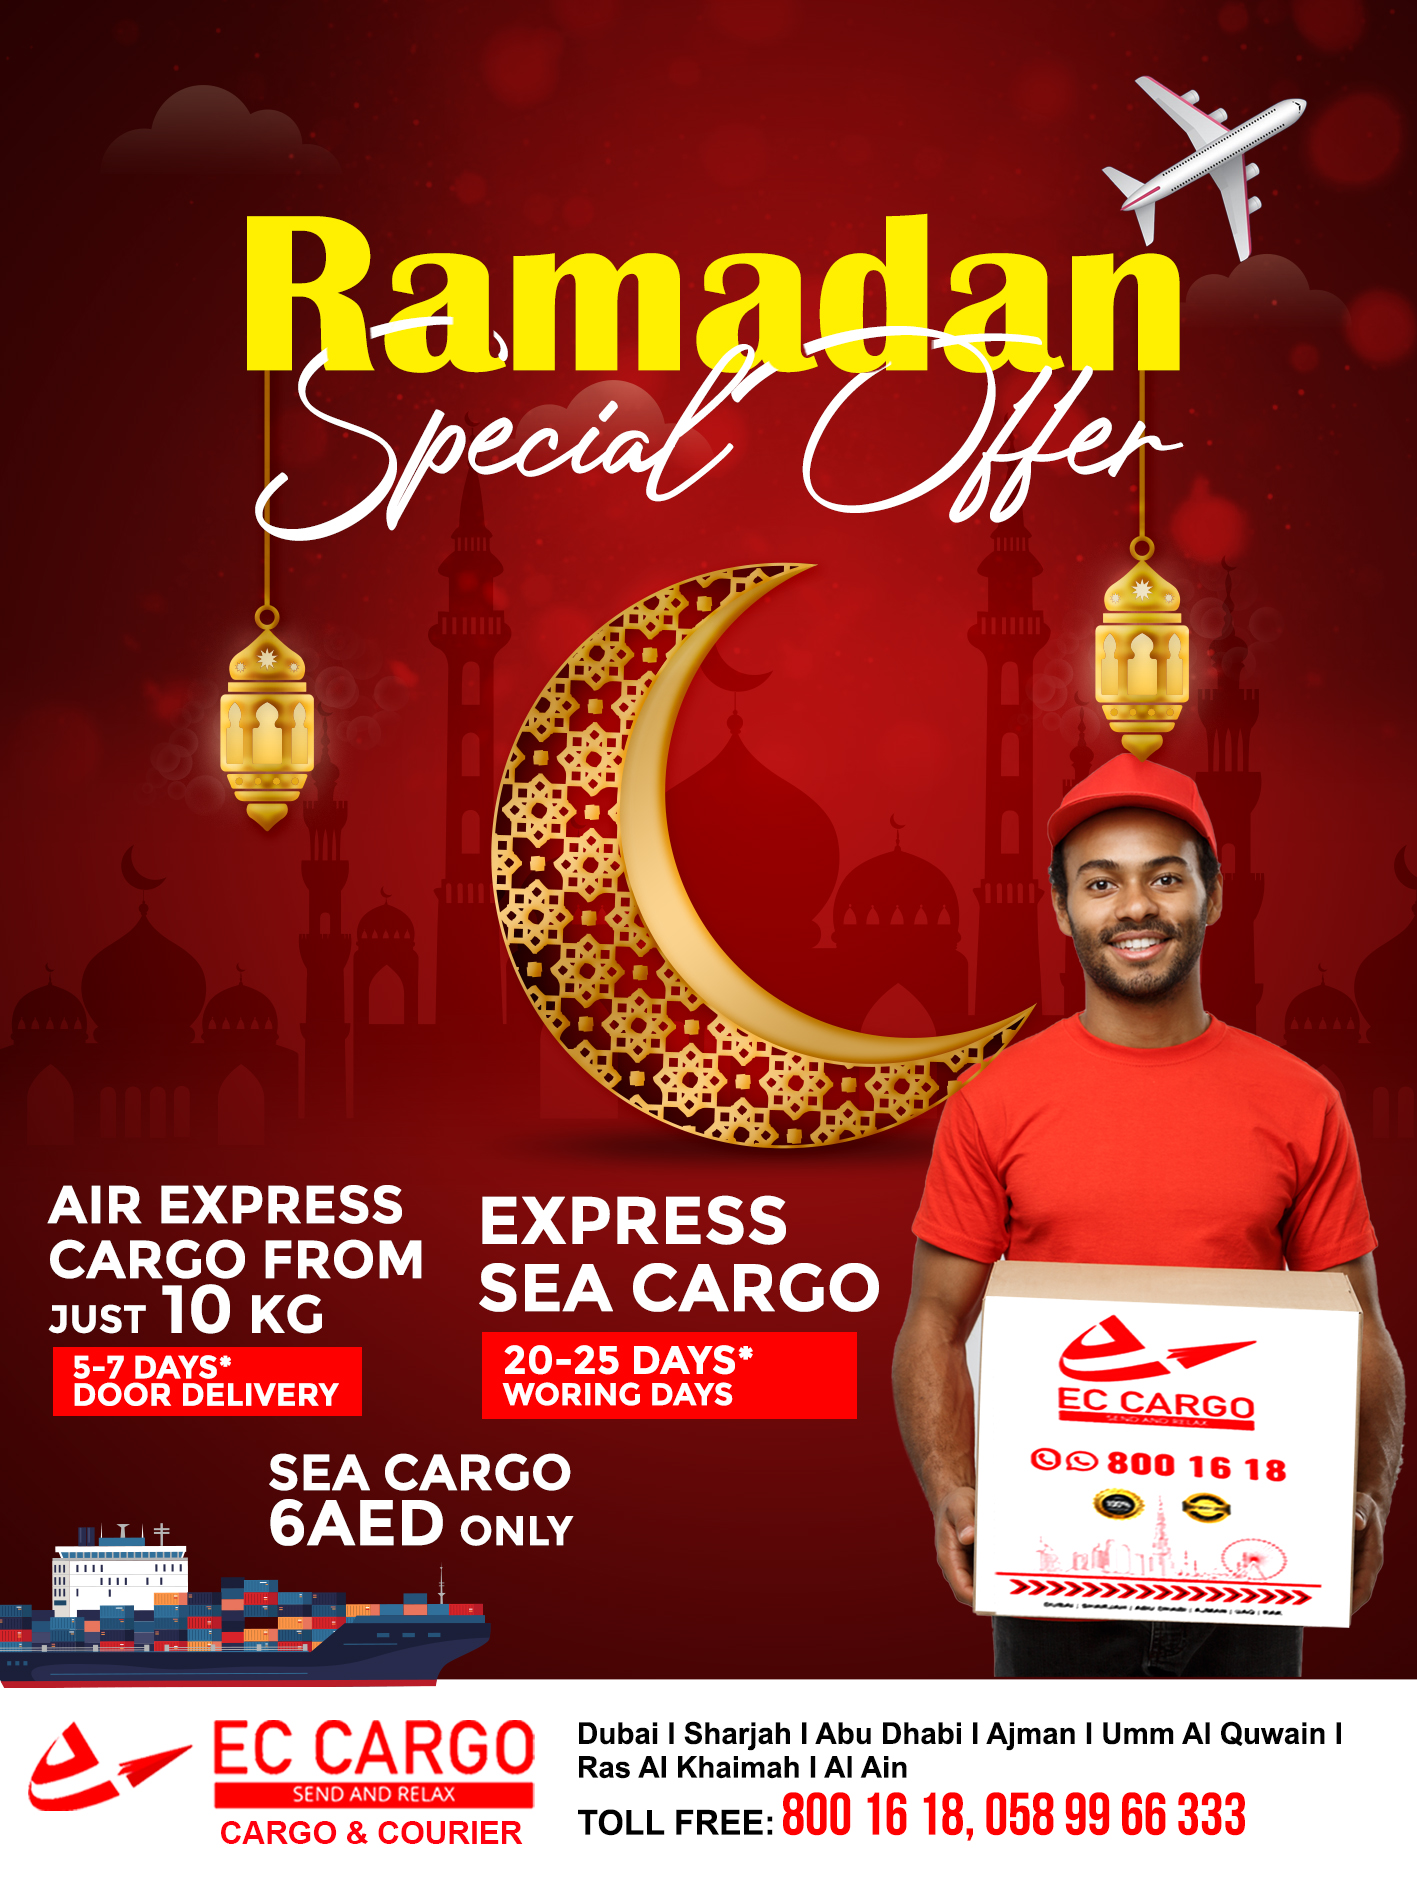 Ramadan special offer